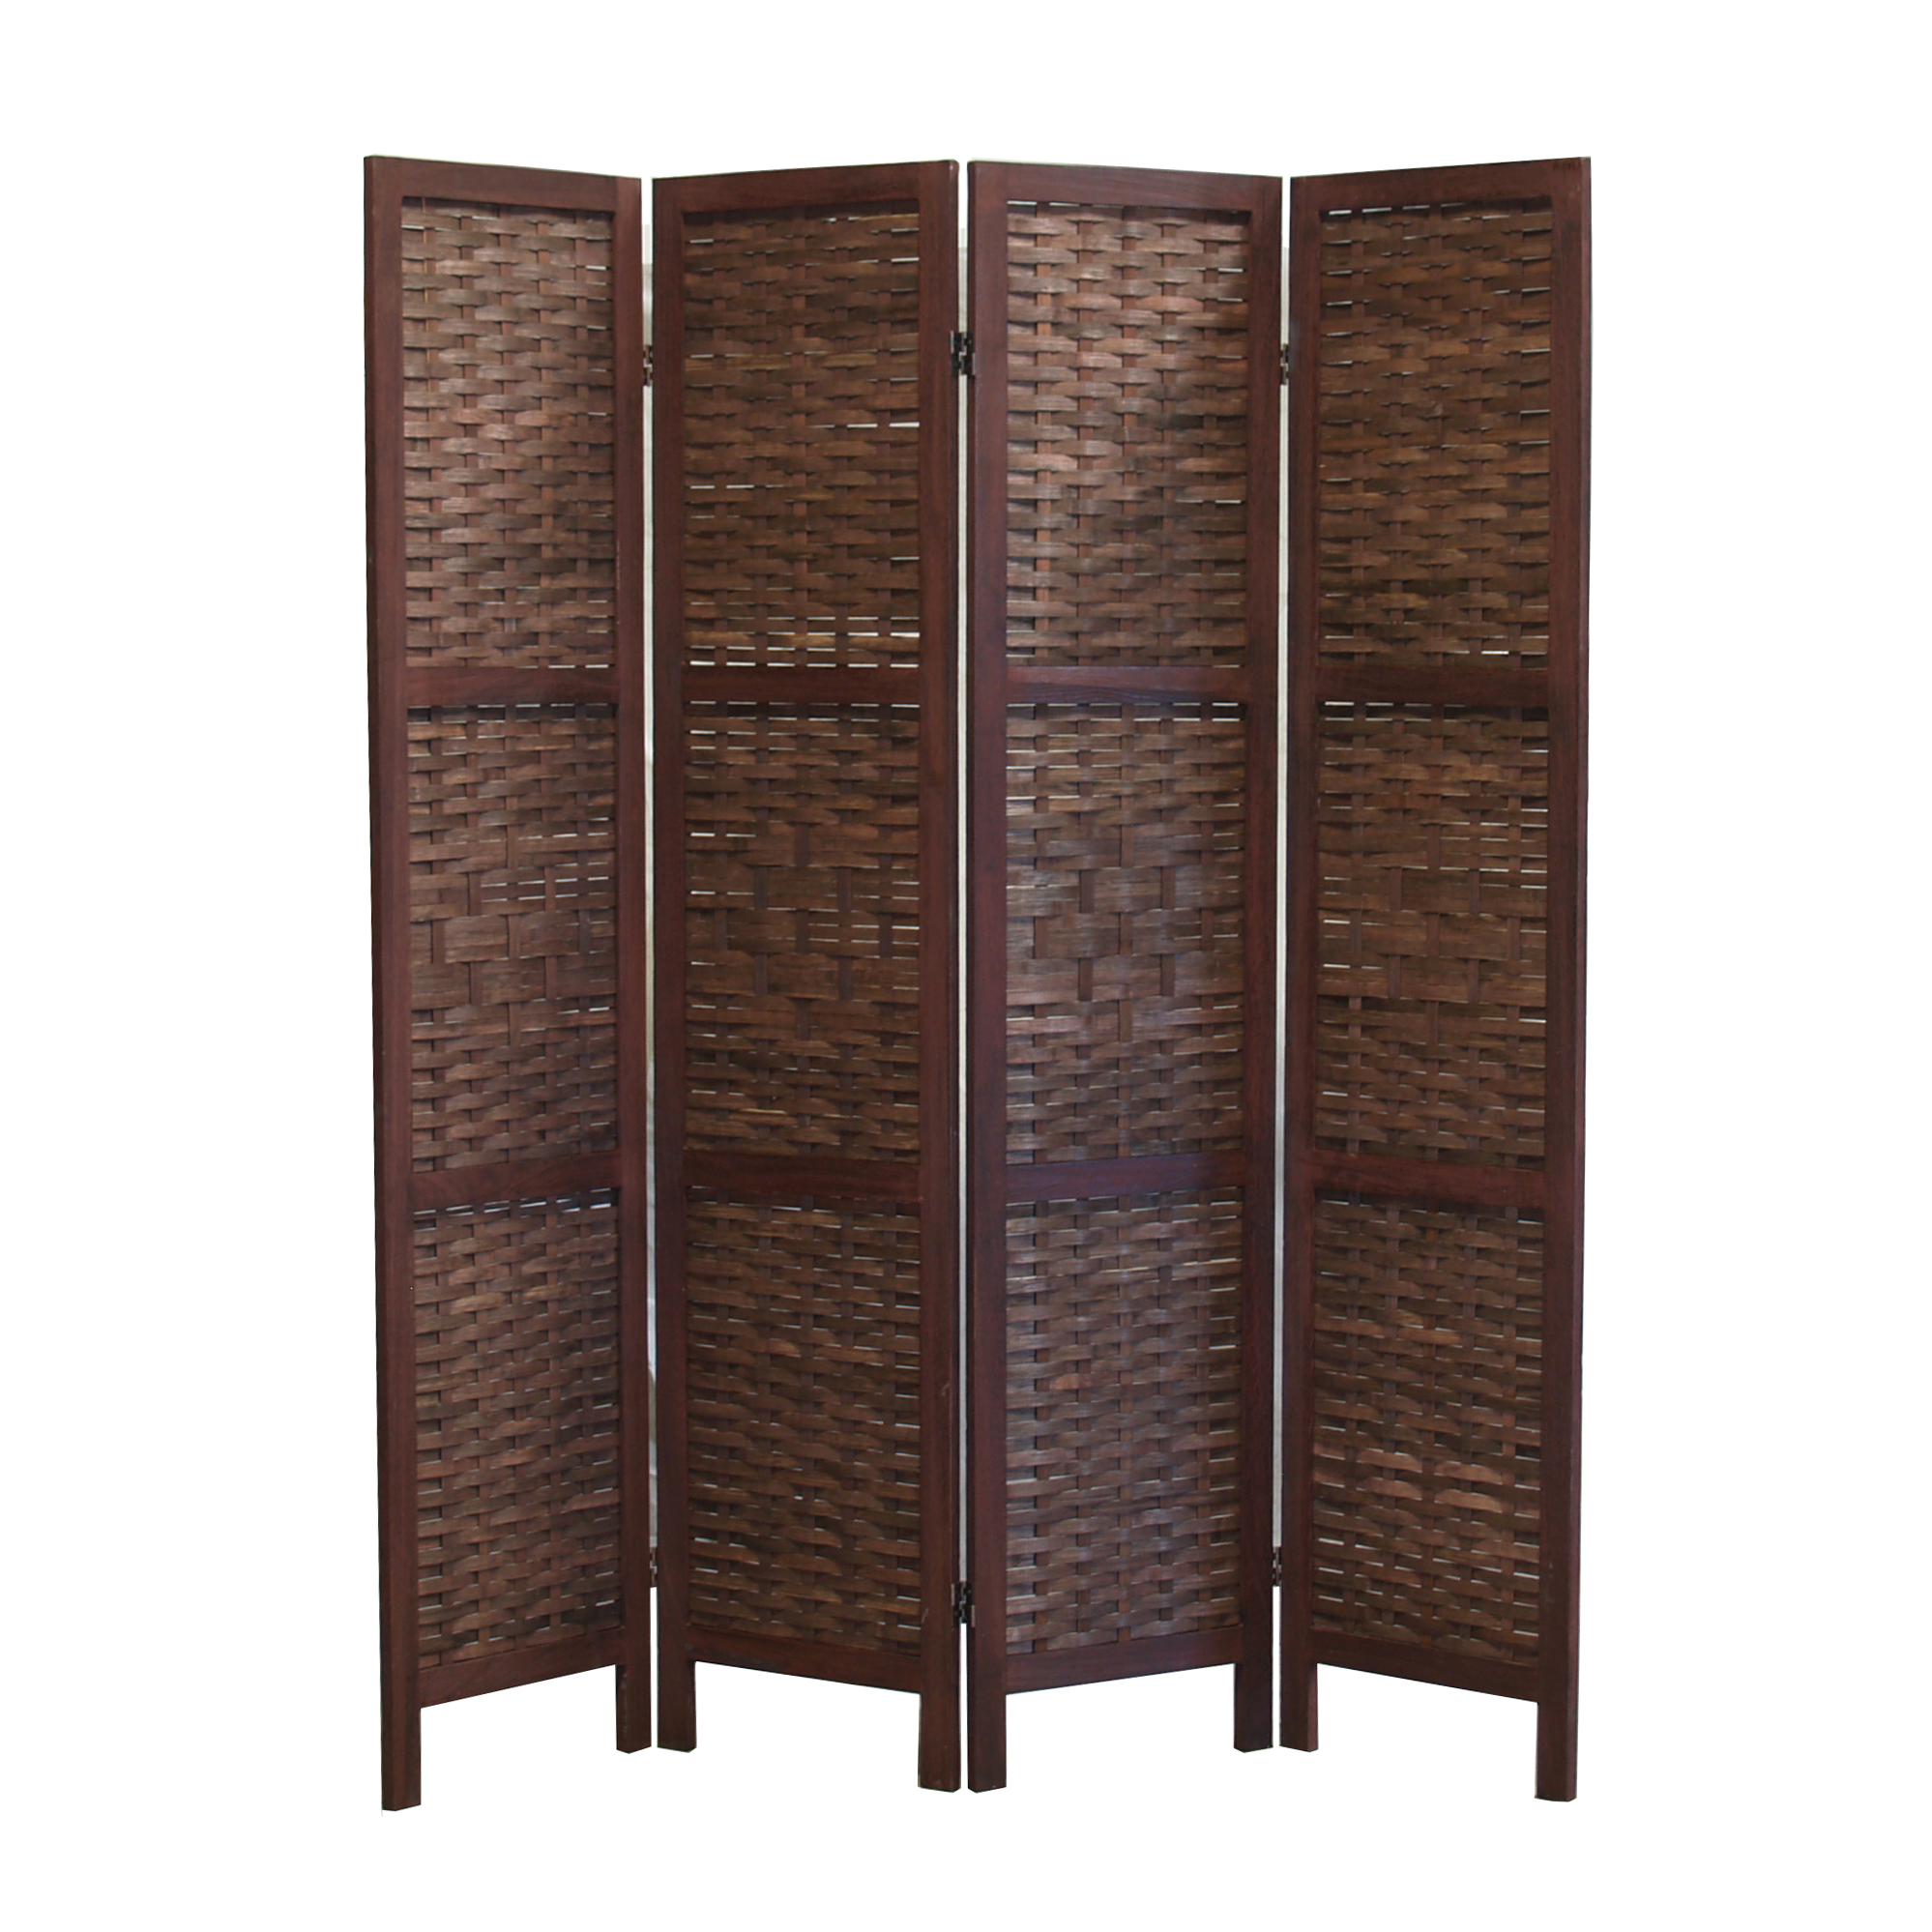 Proman Products Saigon 4 Panel Folding Screen, 67" Tall, Walnut - image 1 of 3